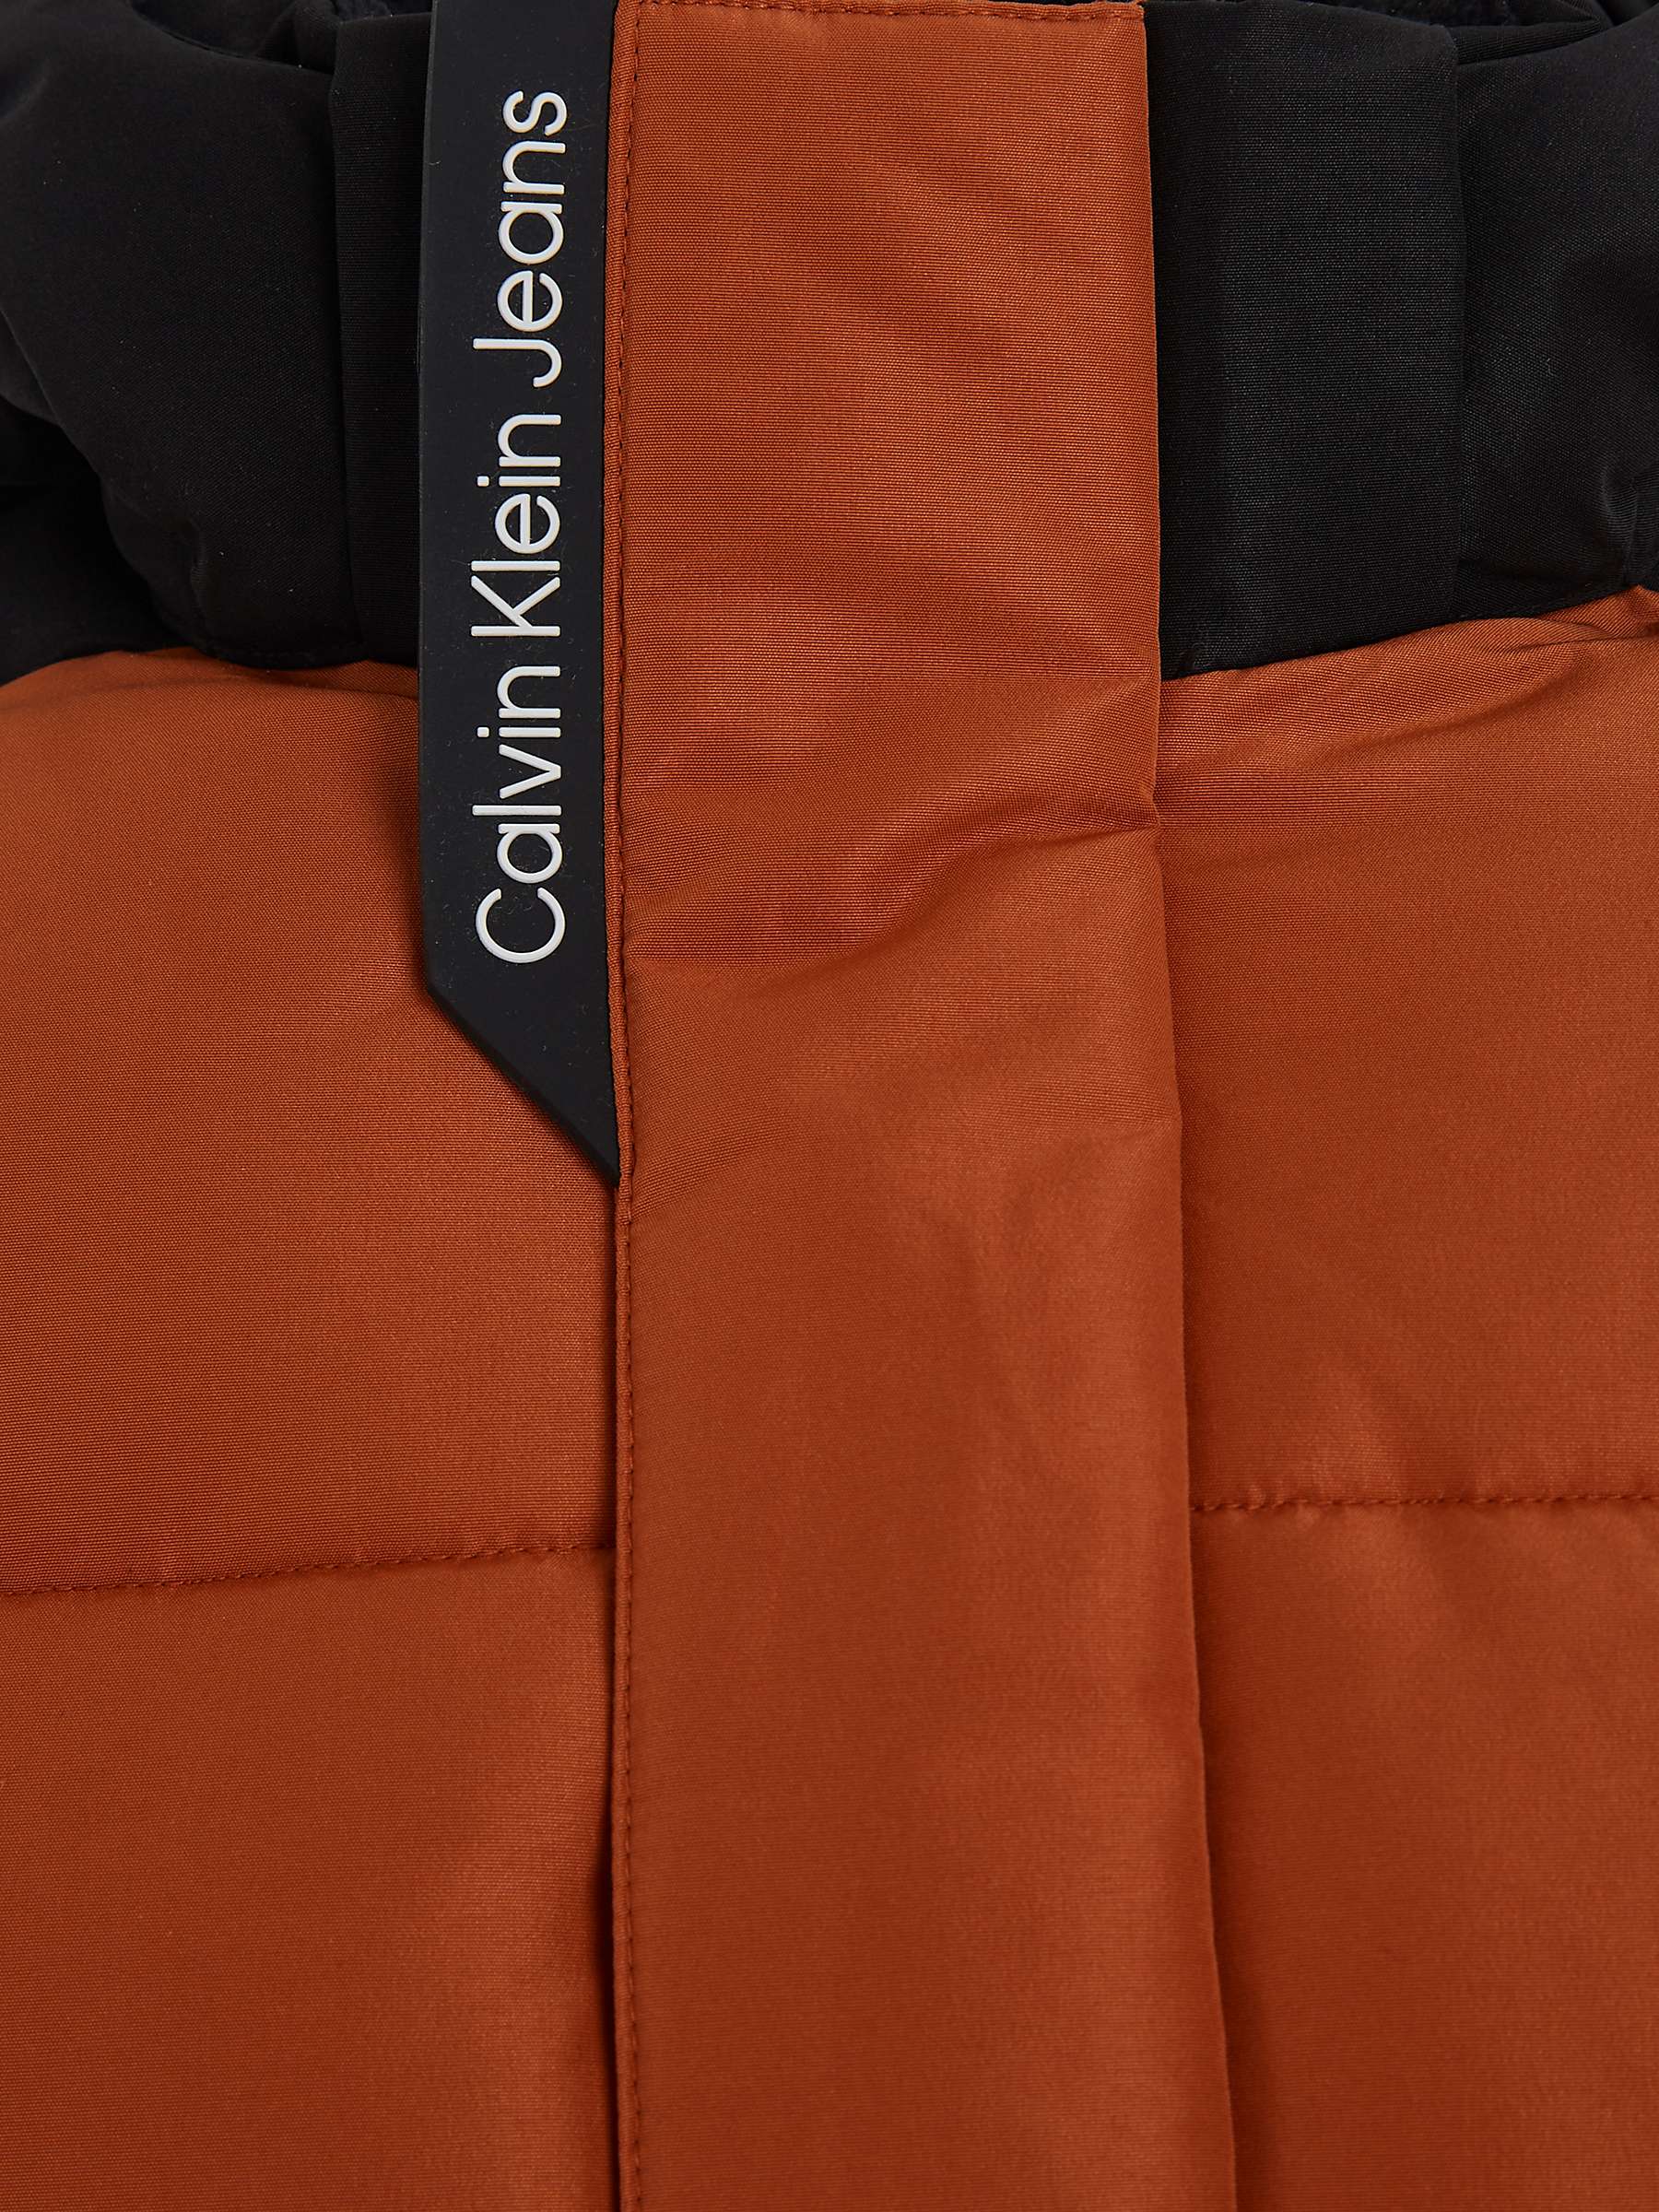 Buy Calvin Klein Kids' Colour Block Puffer Jacket, Auburn/Black Online at johnlewis.com